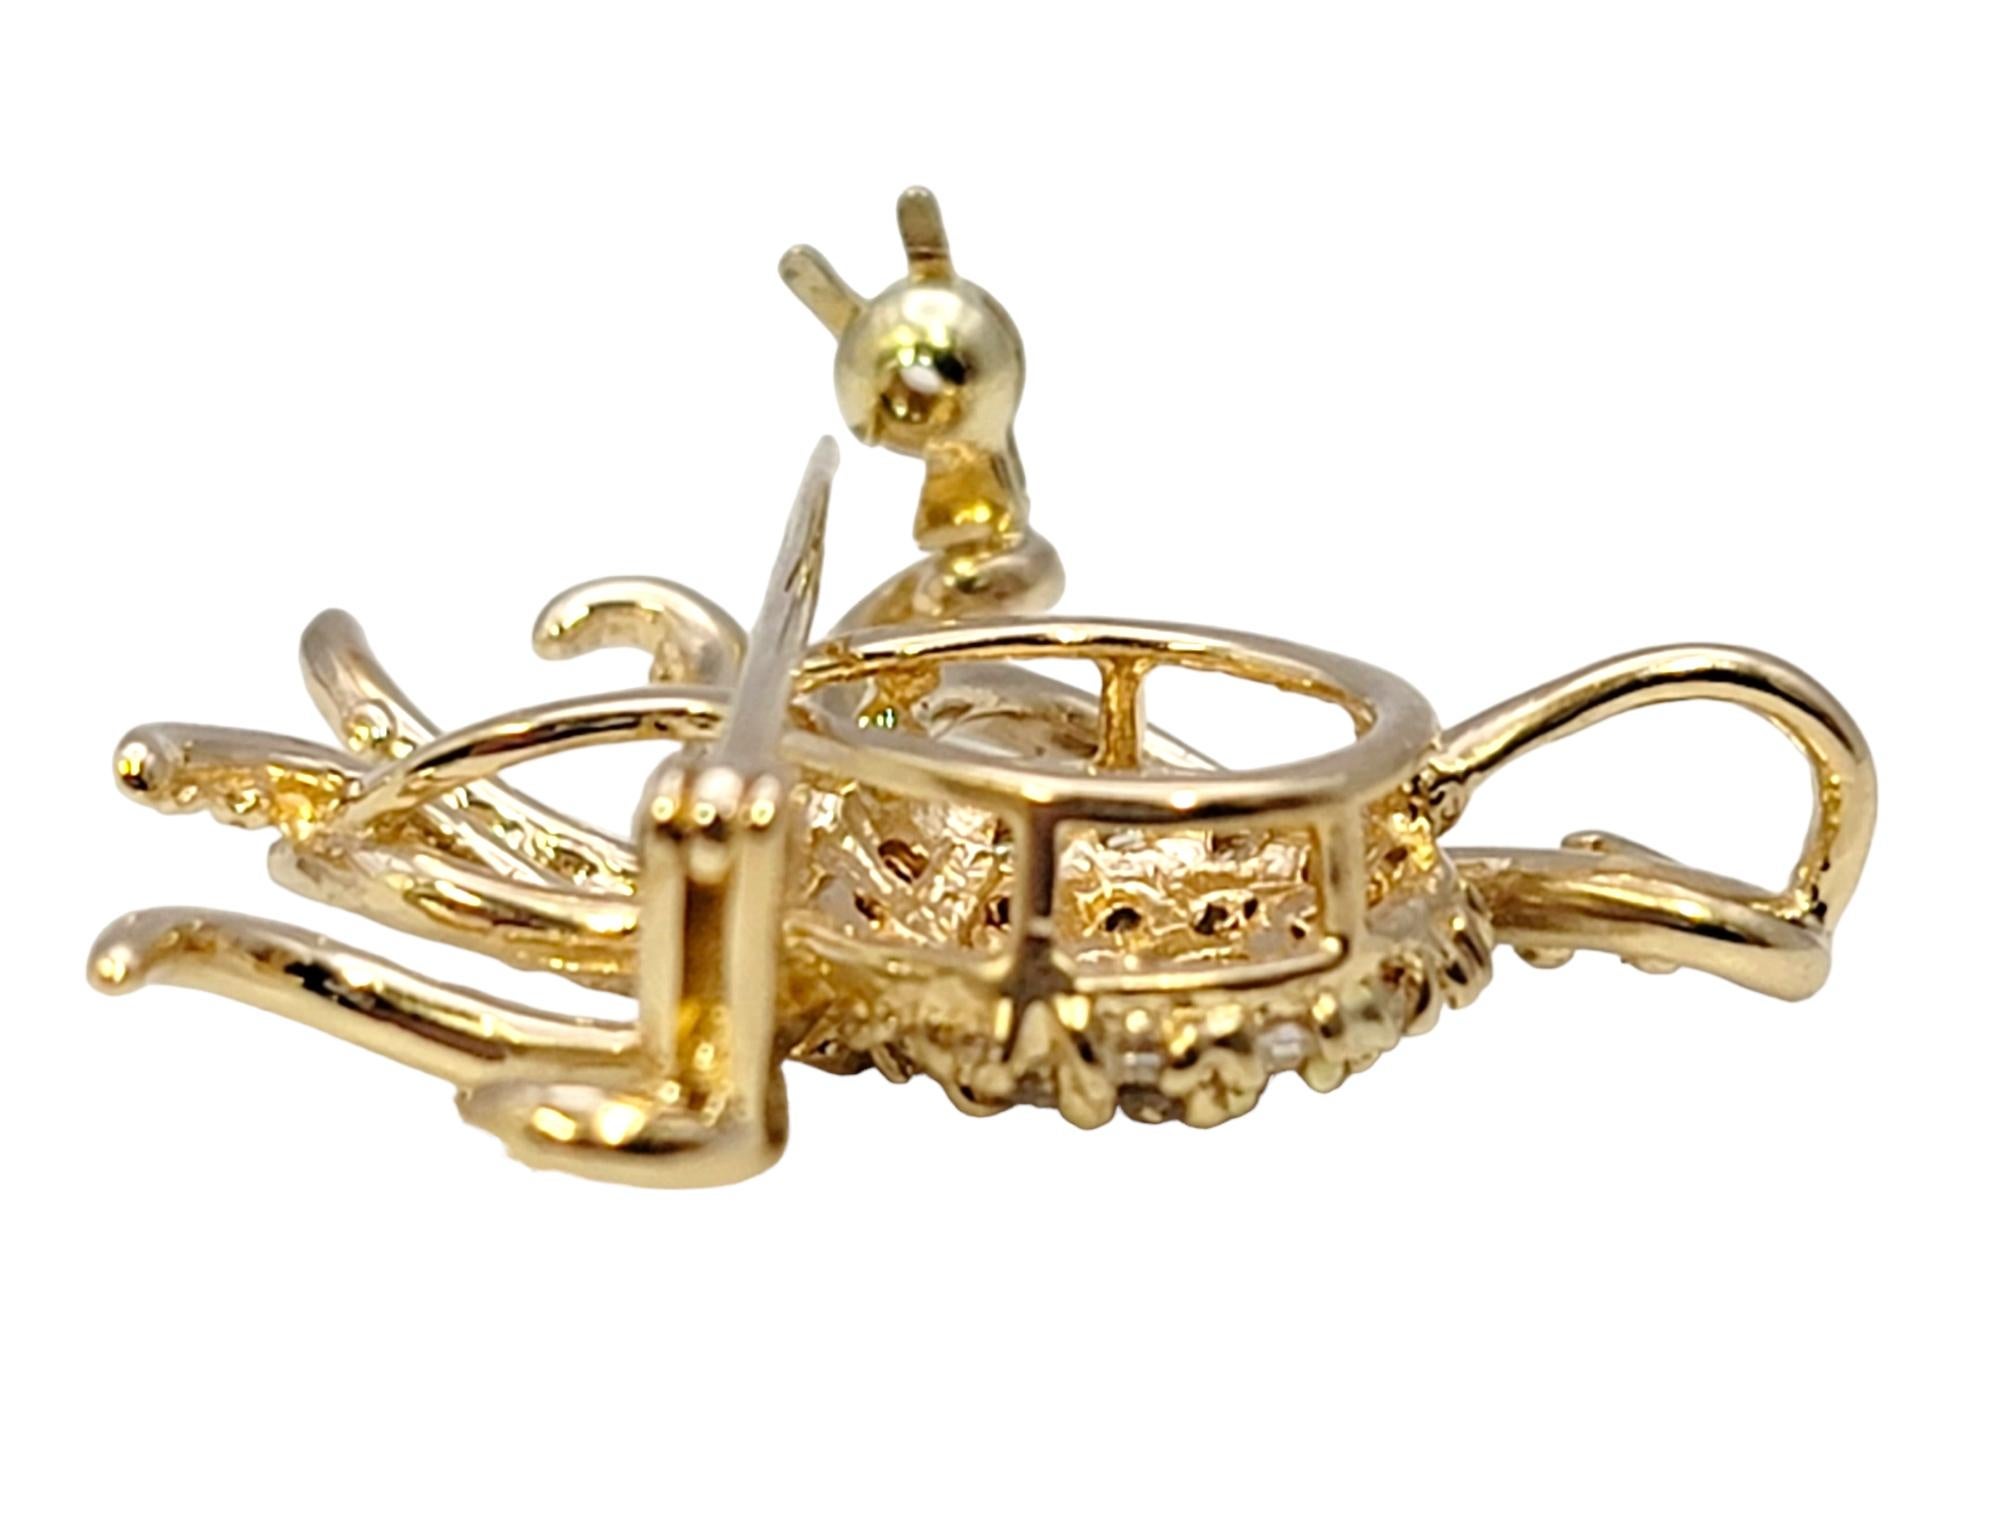 Delightful 14 Karat Polished Yellow Gold Octopus Brooch / Pendant with Diamonds 1